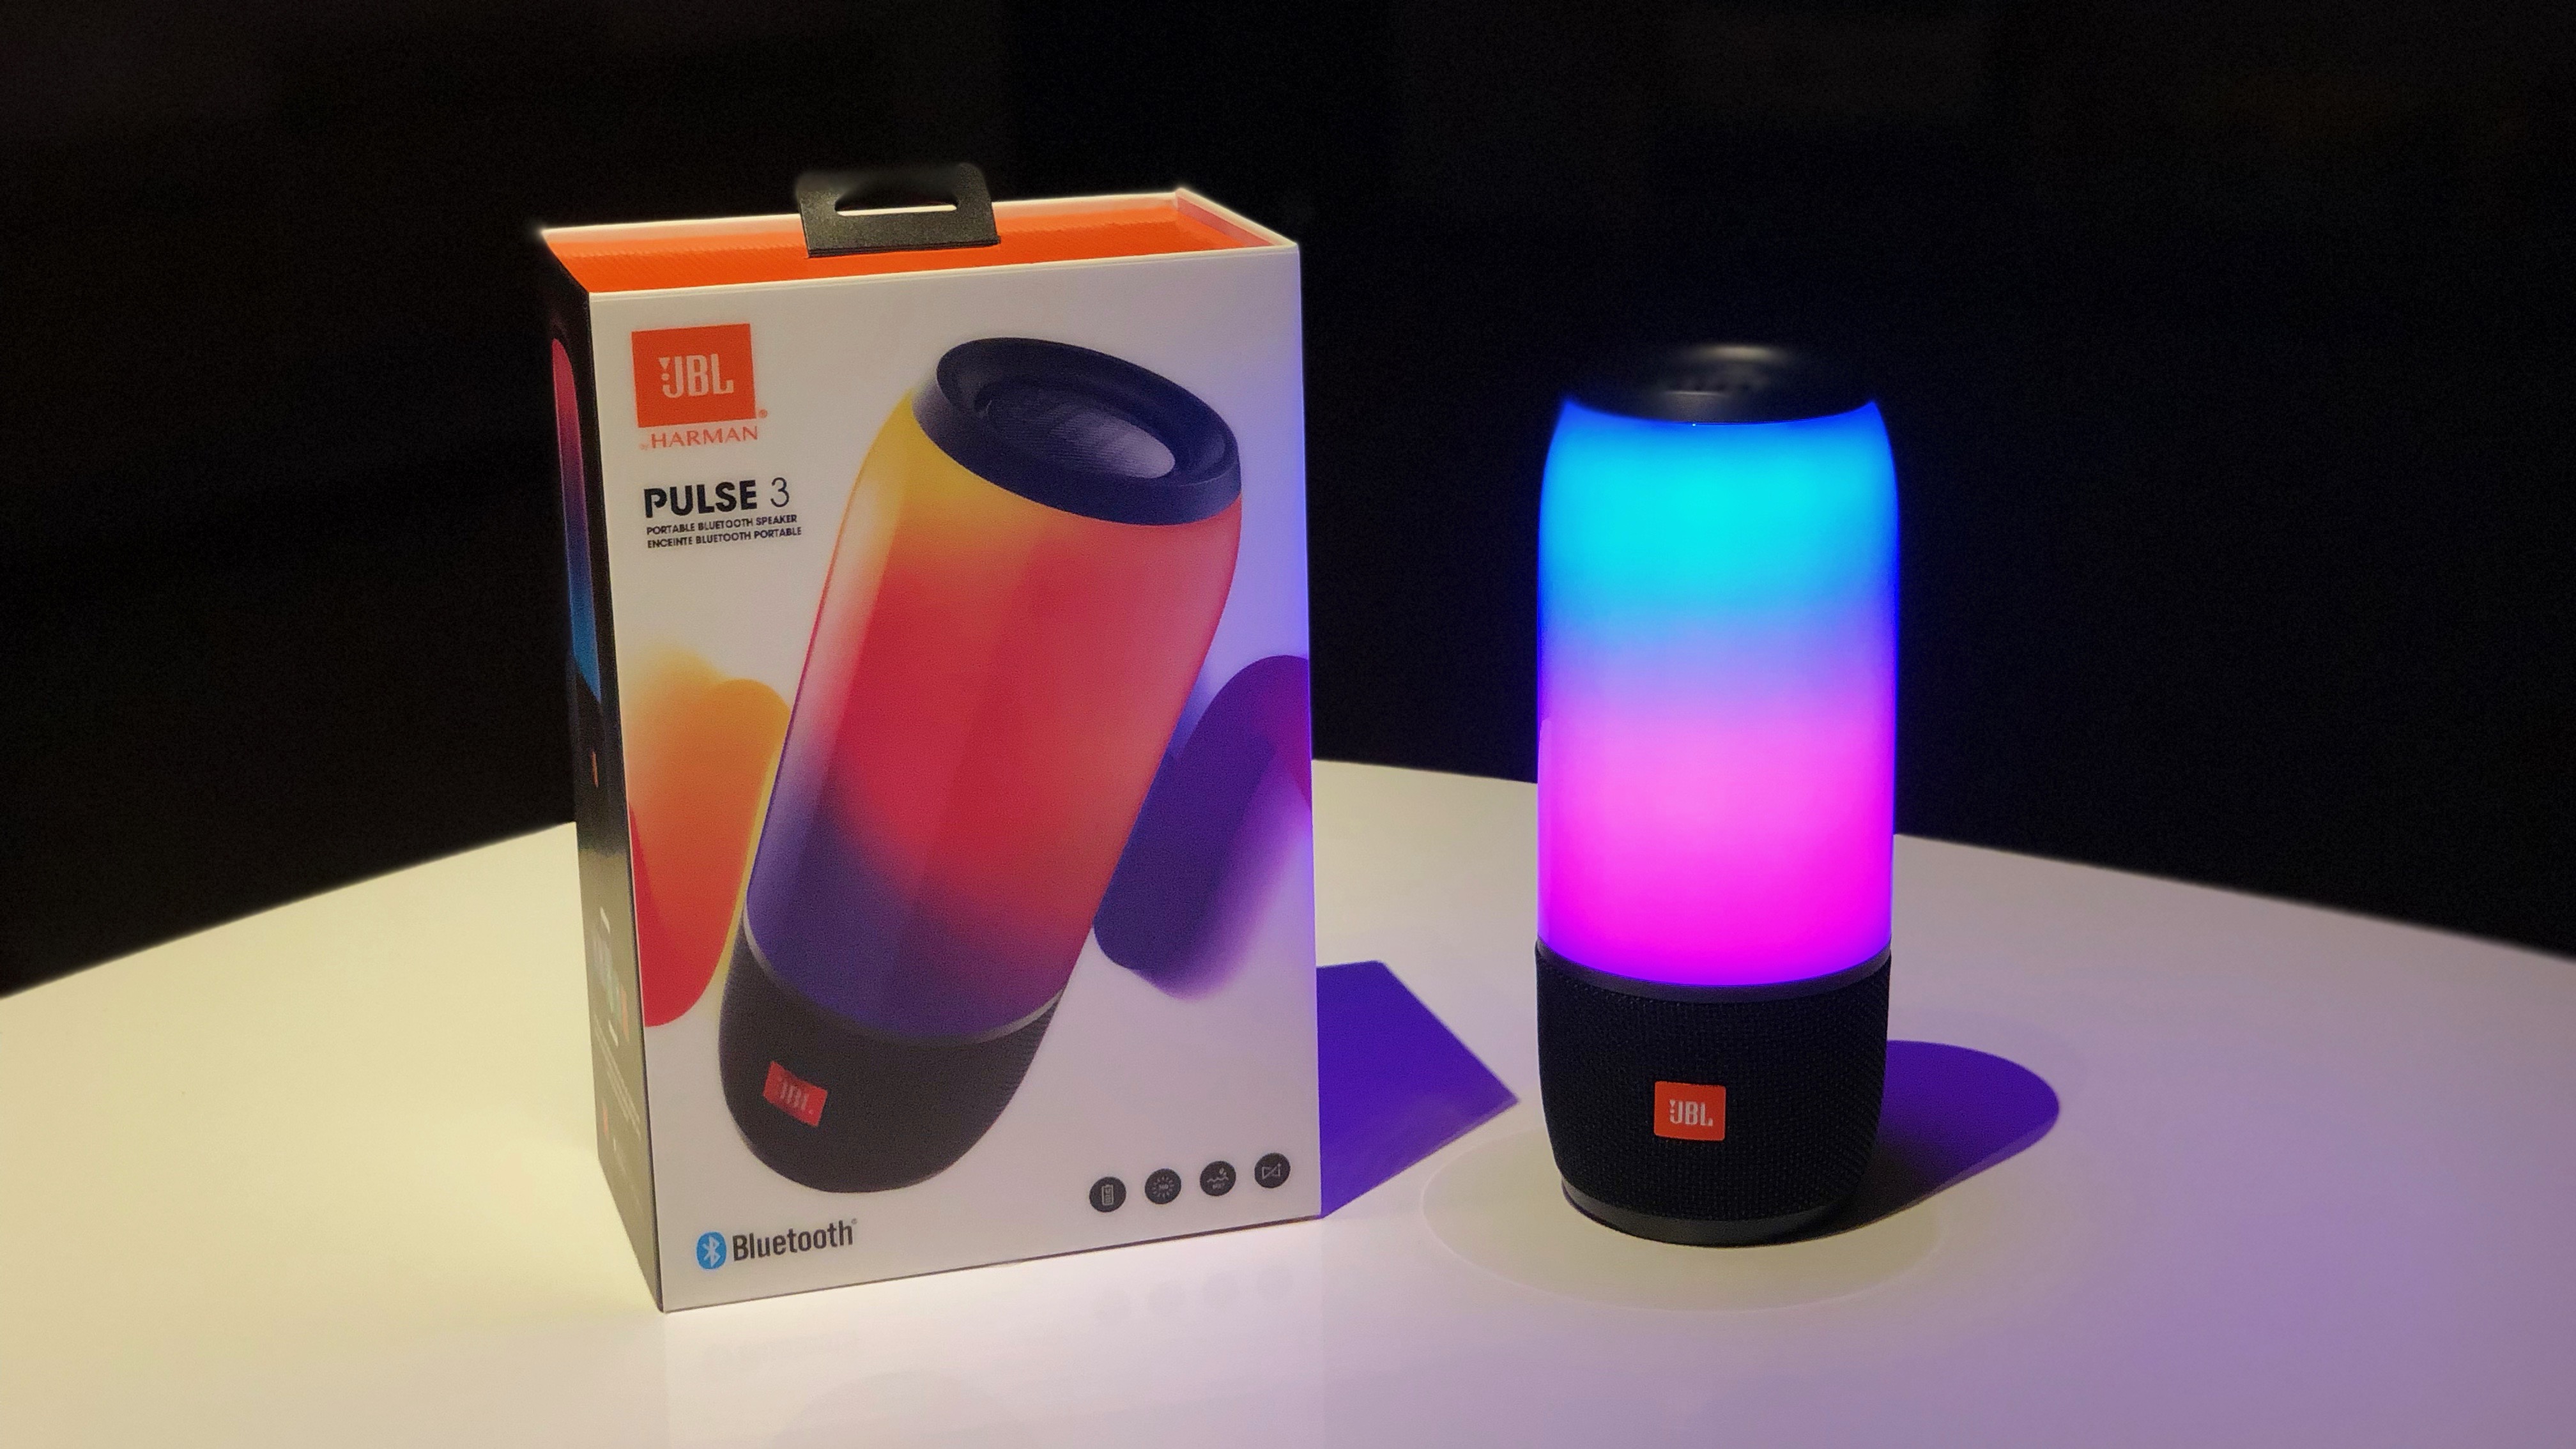 Review: JBL's Pulse 3 waterproof speaker offers solid sound, built